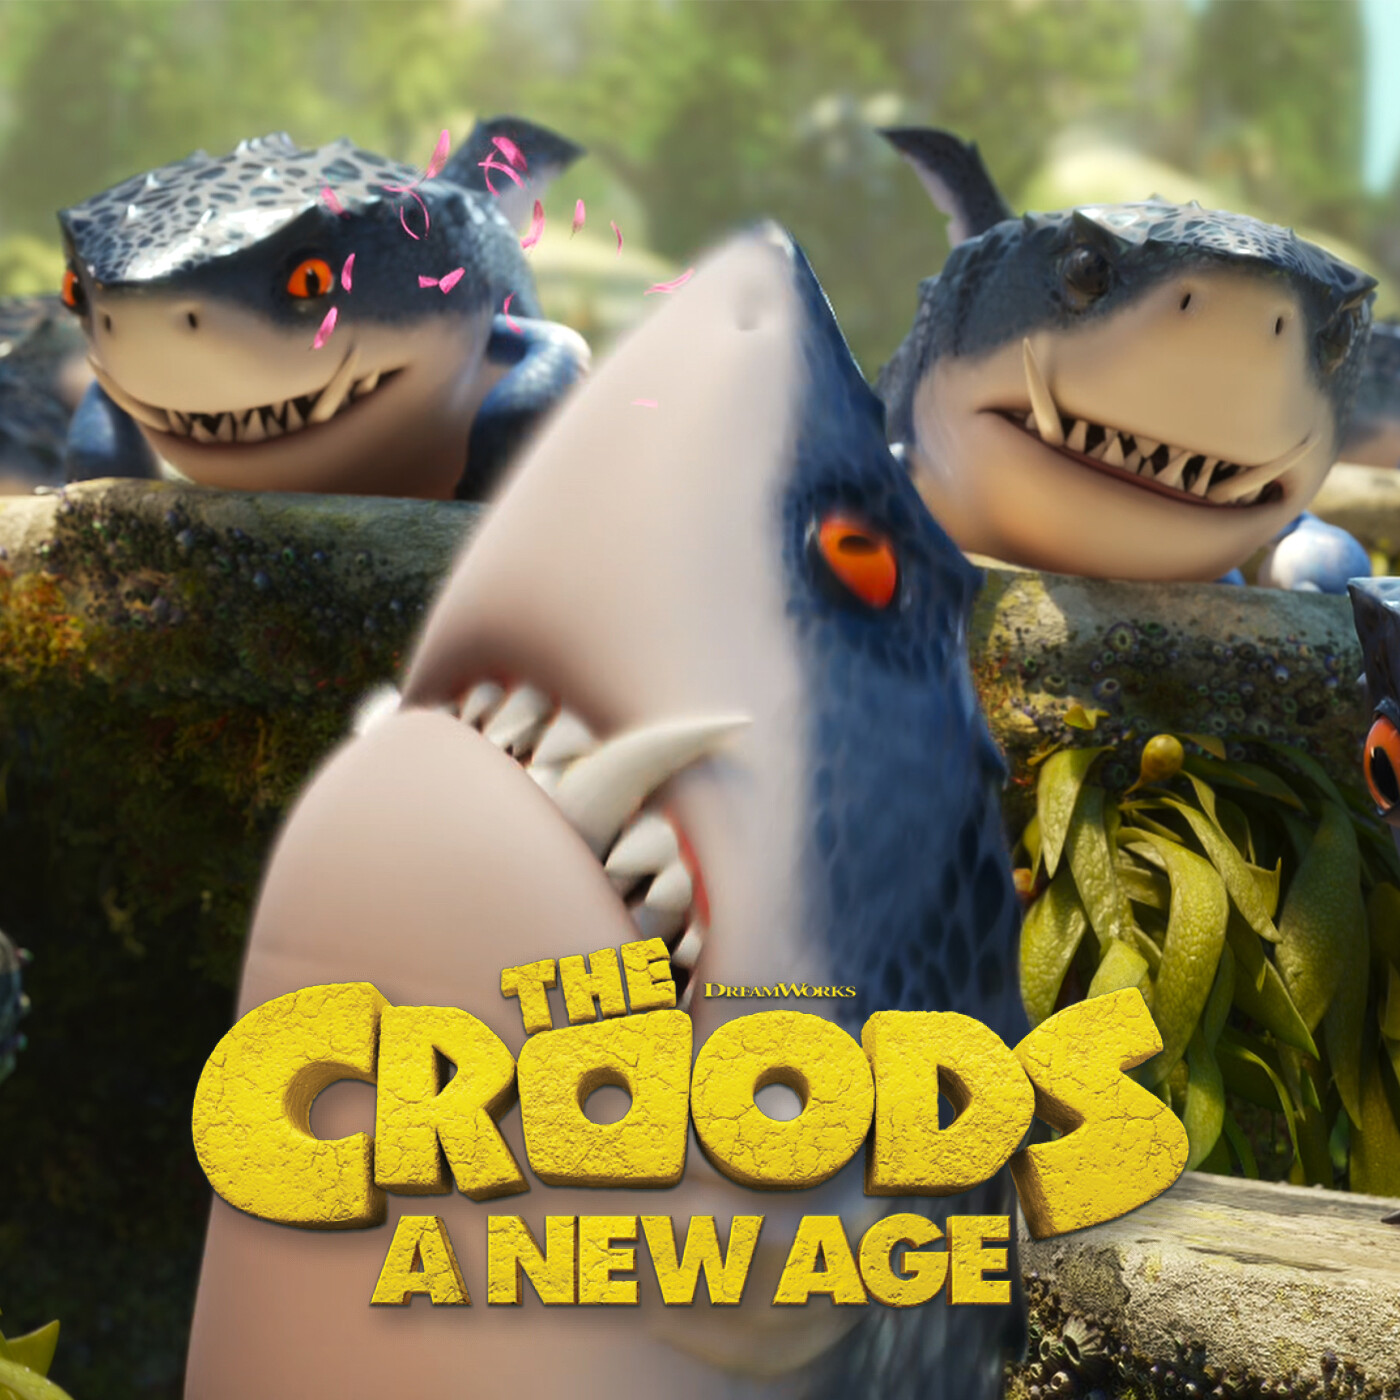 Croods A New Age - Landshark